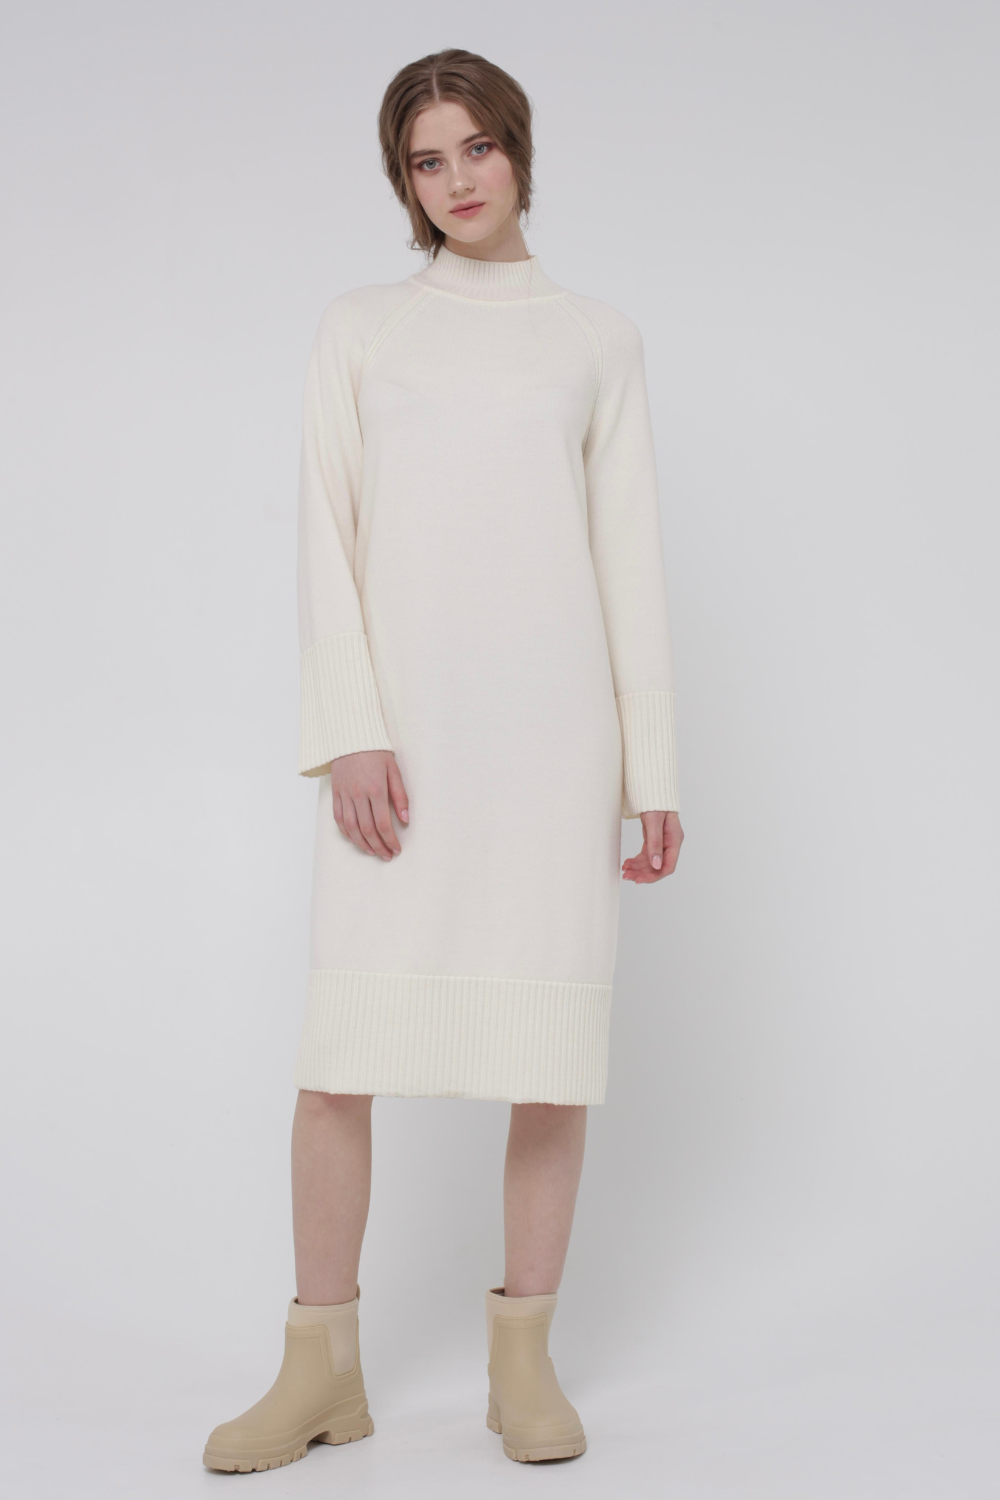 Raglan midi dress, cream (MissSecret) PU-022-white-dress